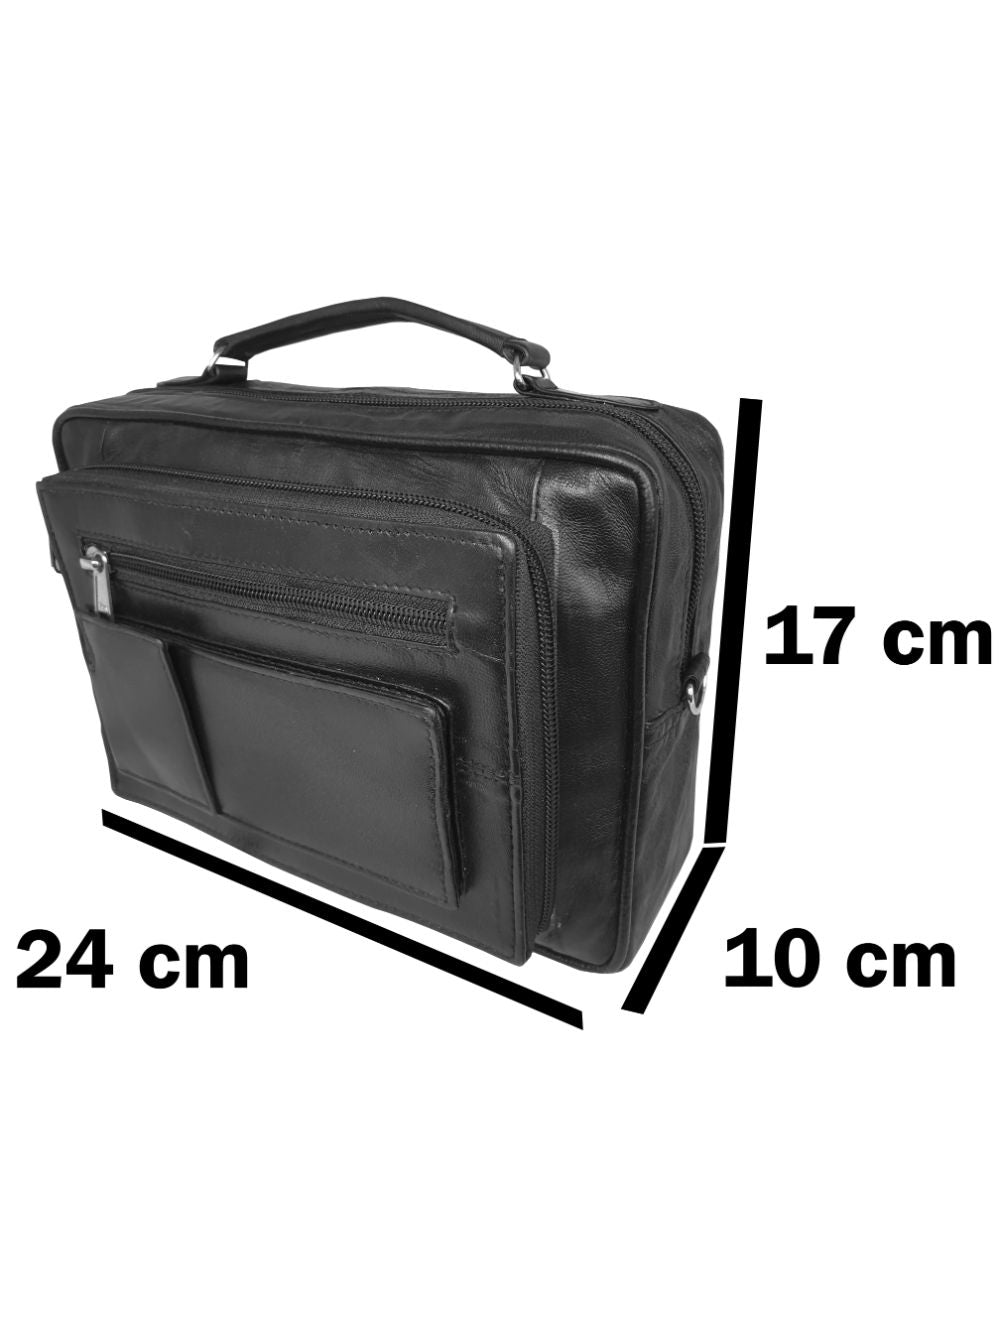 Roamlite Travel Orginizer bag Black Leather RL521 Measurements